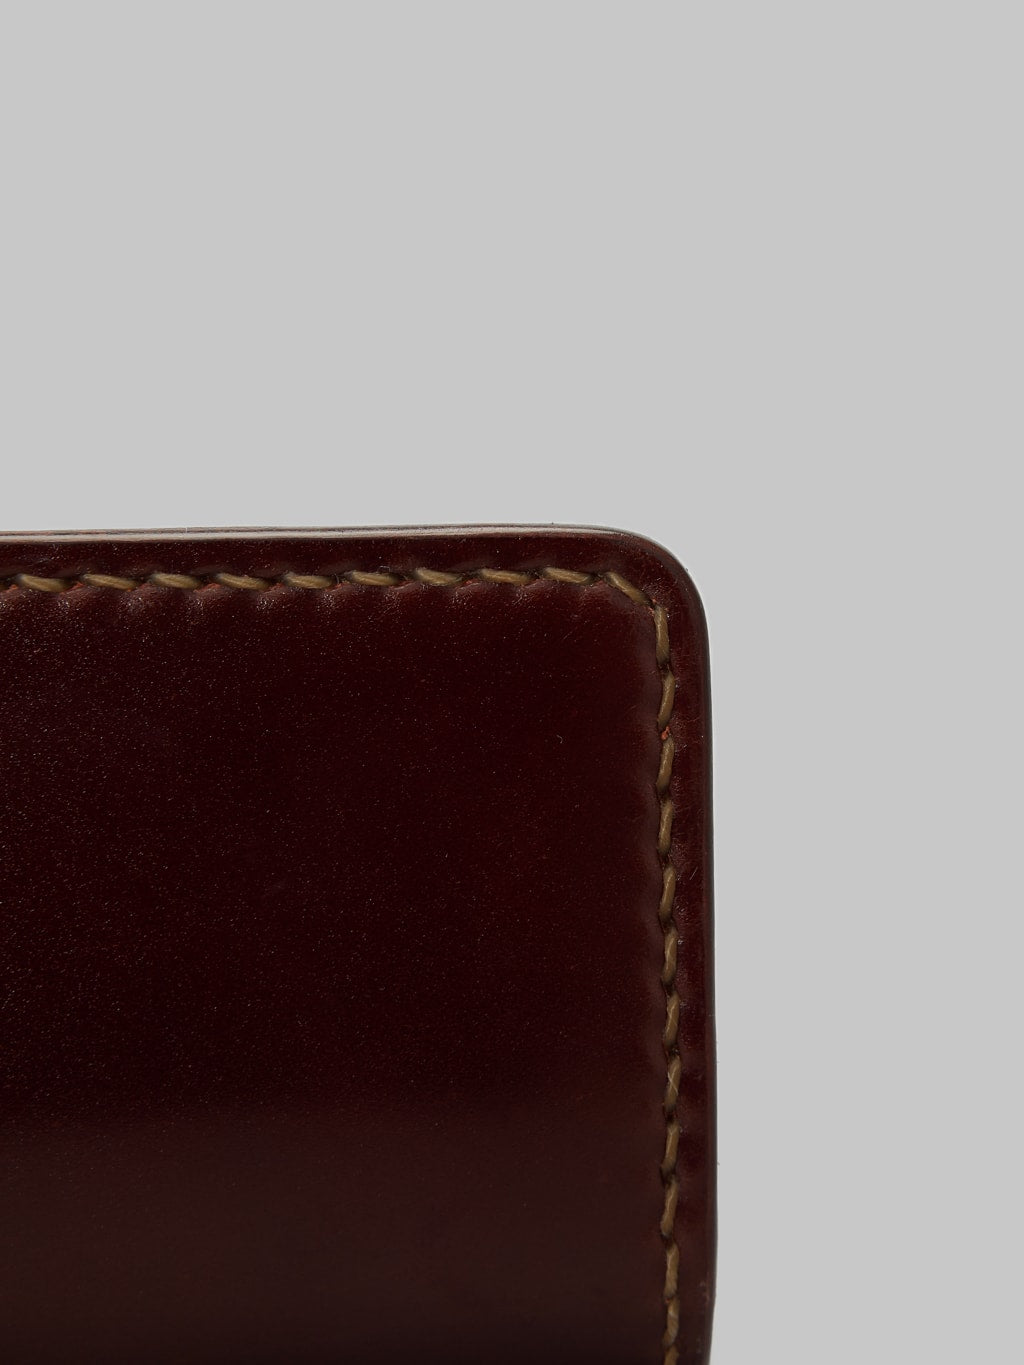 The Flat Head handsewn small cordovan card case brown fabric closeup